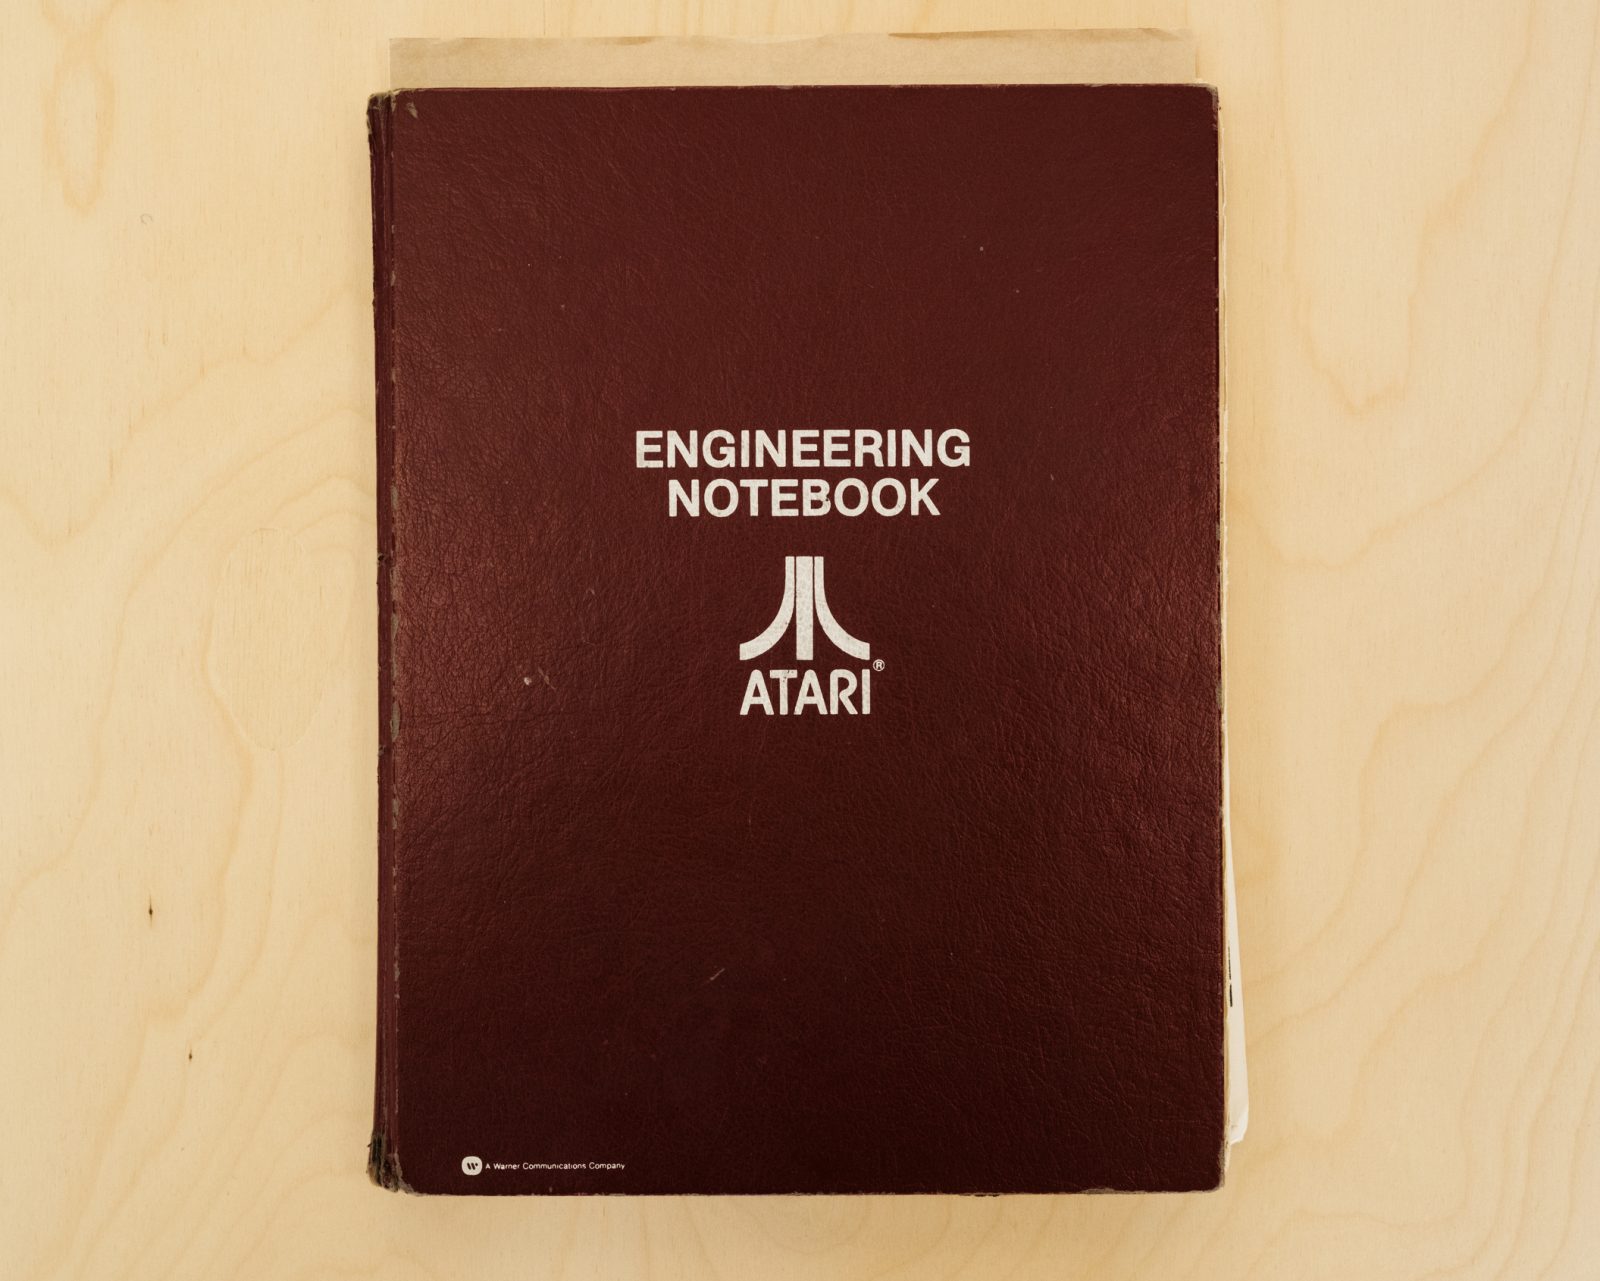 Engineering Notebook - Atari